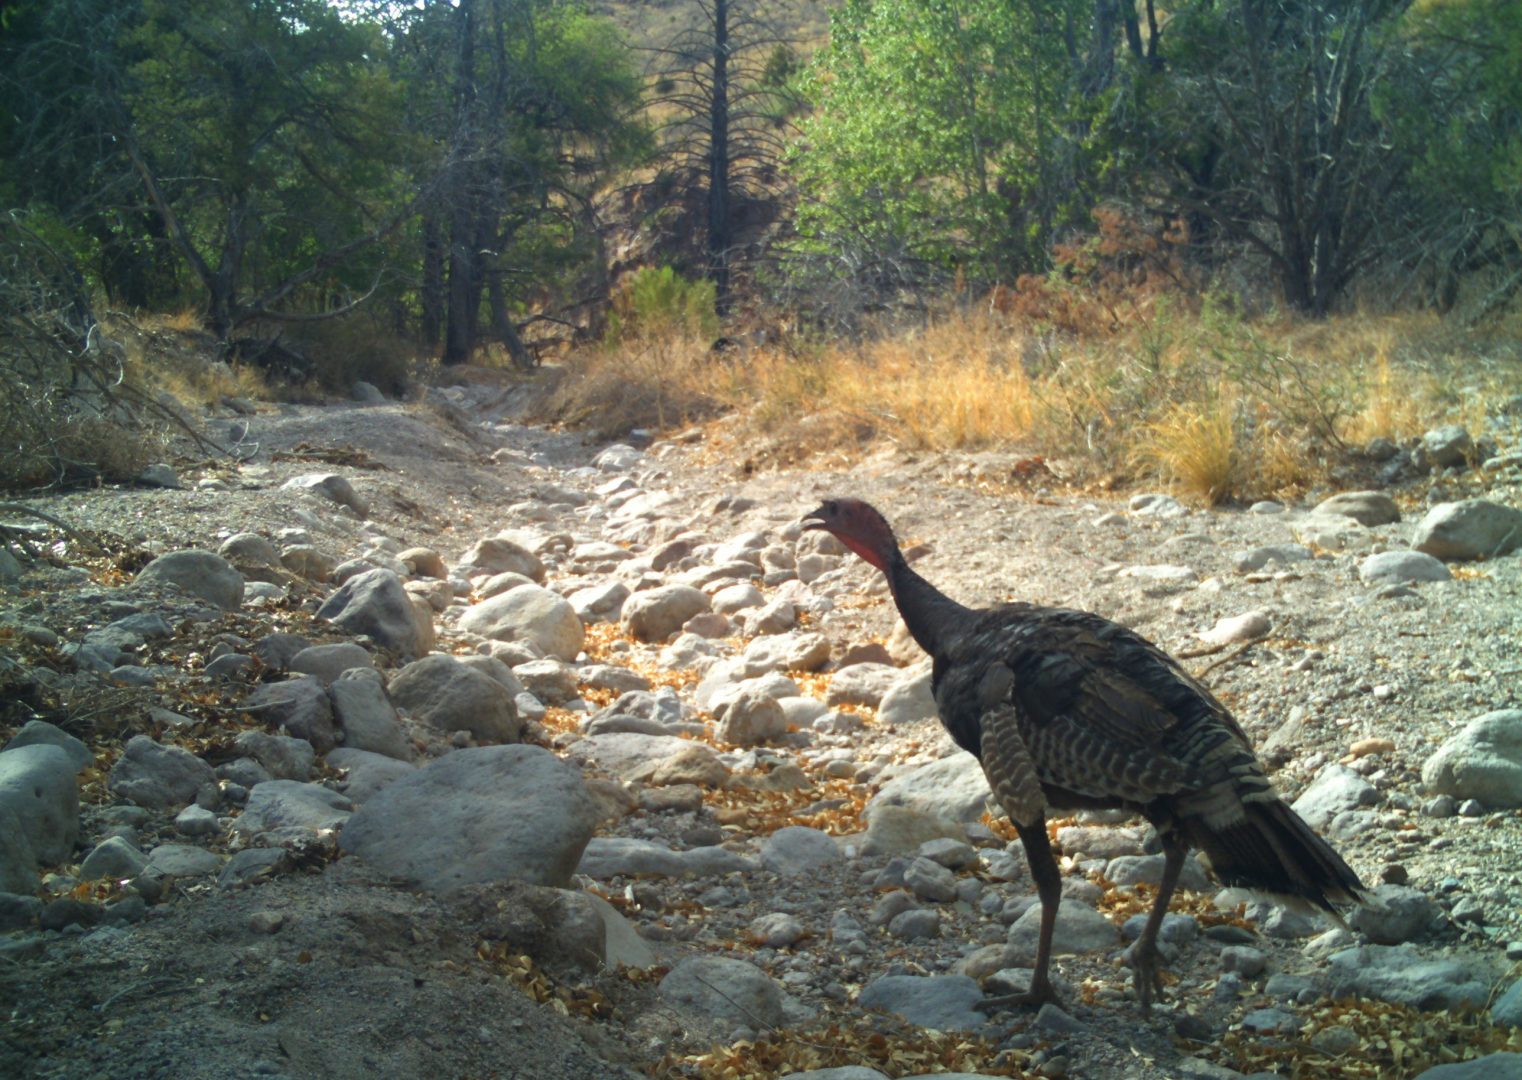 Turkey at Chiricahua National Monument